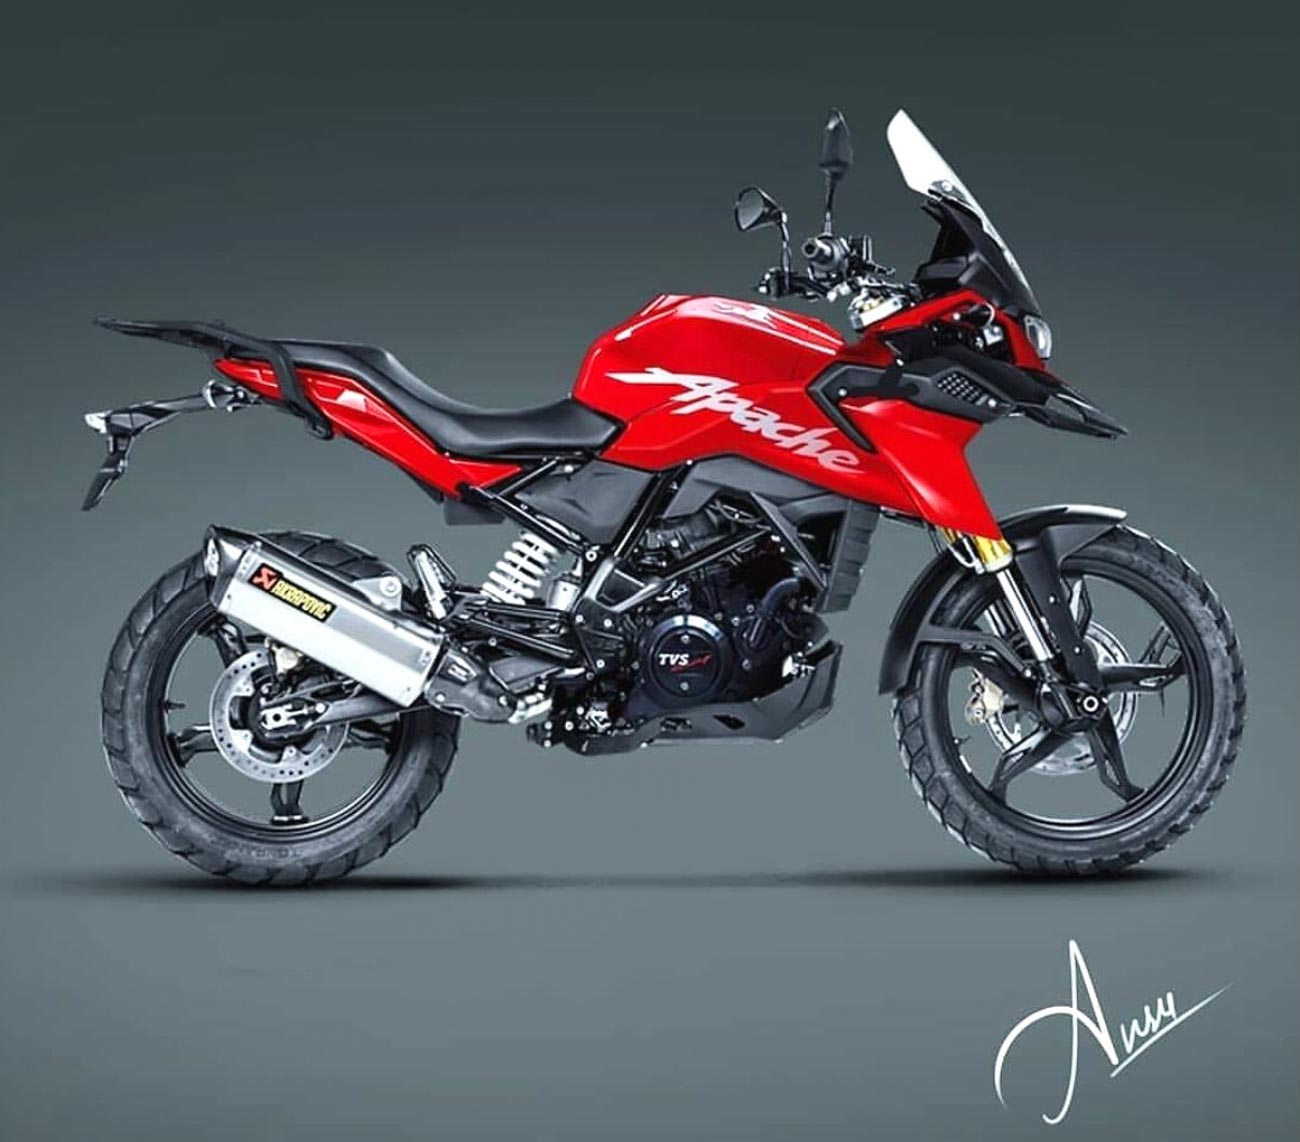 Tvs Apache Rr310 Based Adventure Motorcycle Imaginative Rendering